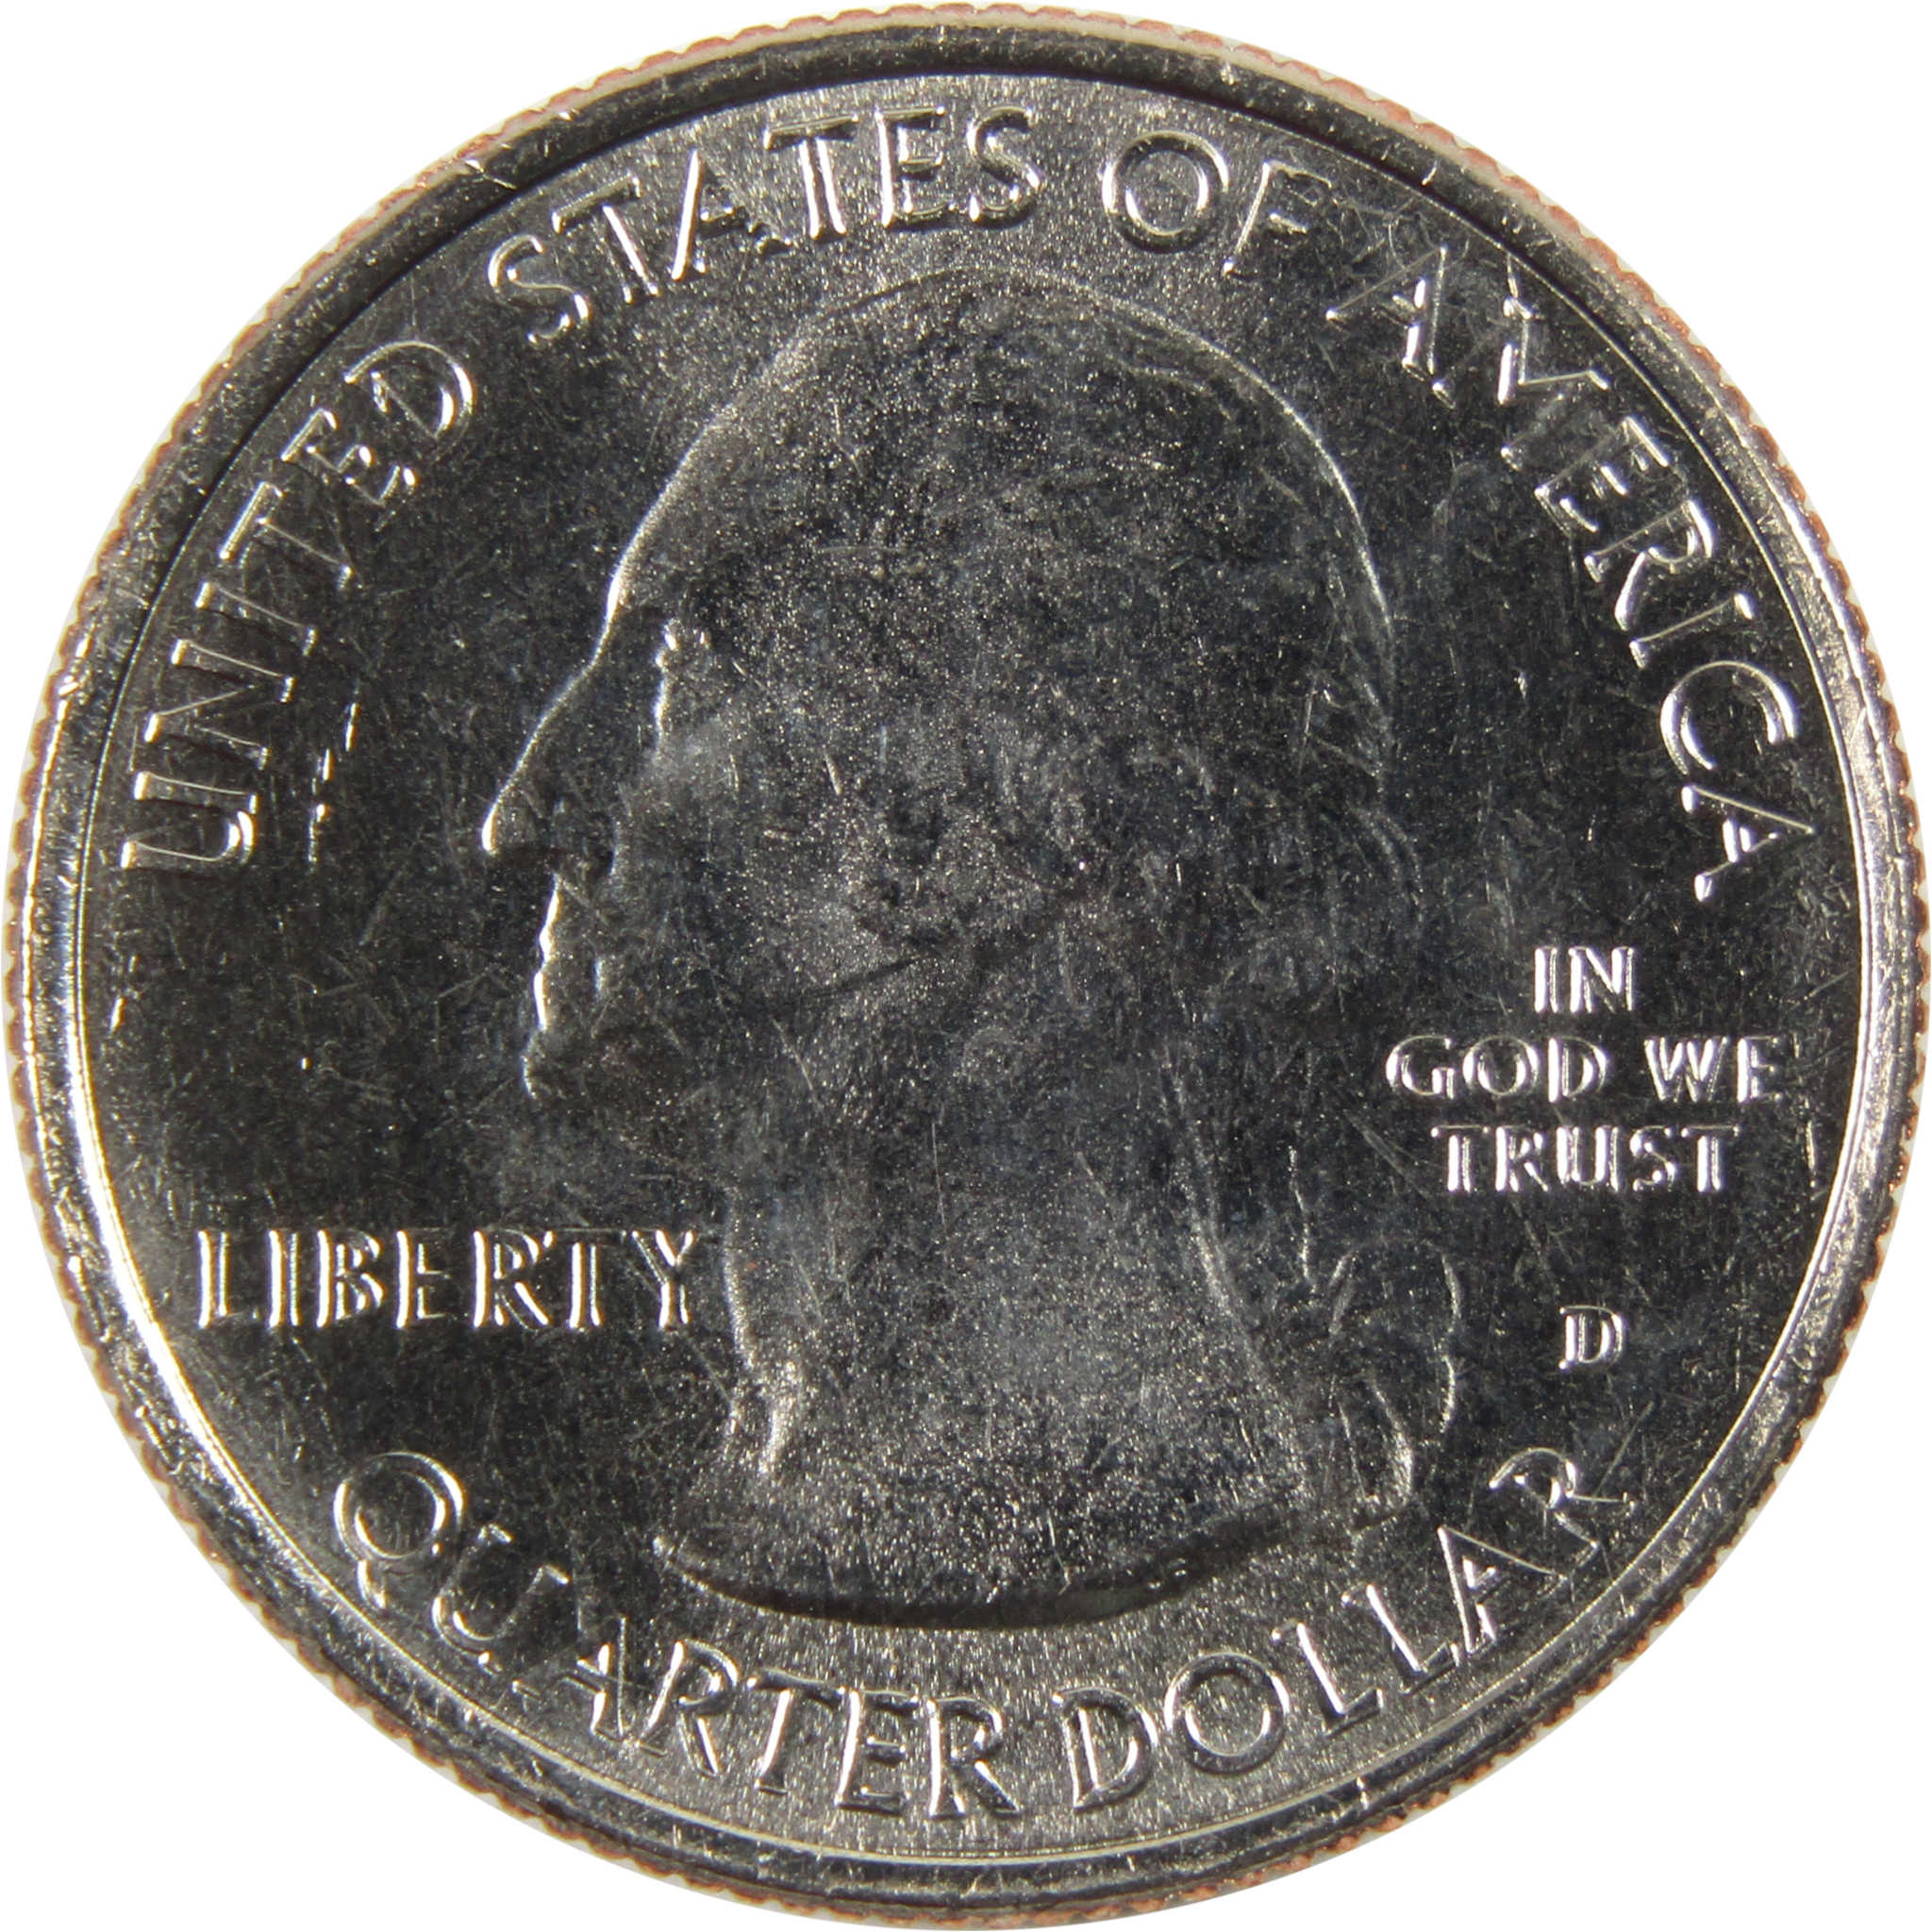 2012 D Acadia National Park Quarter BU Uncirculated Clad 25c Coin